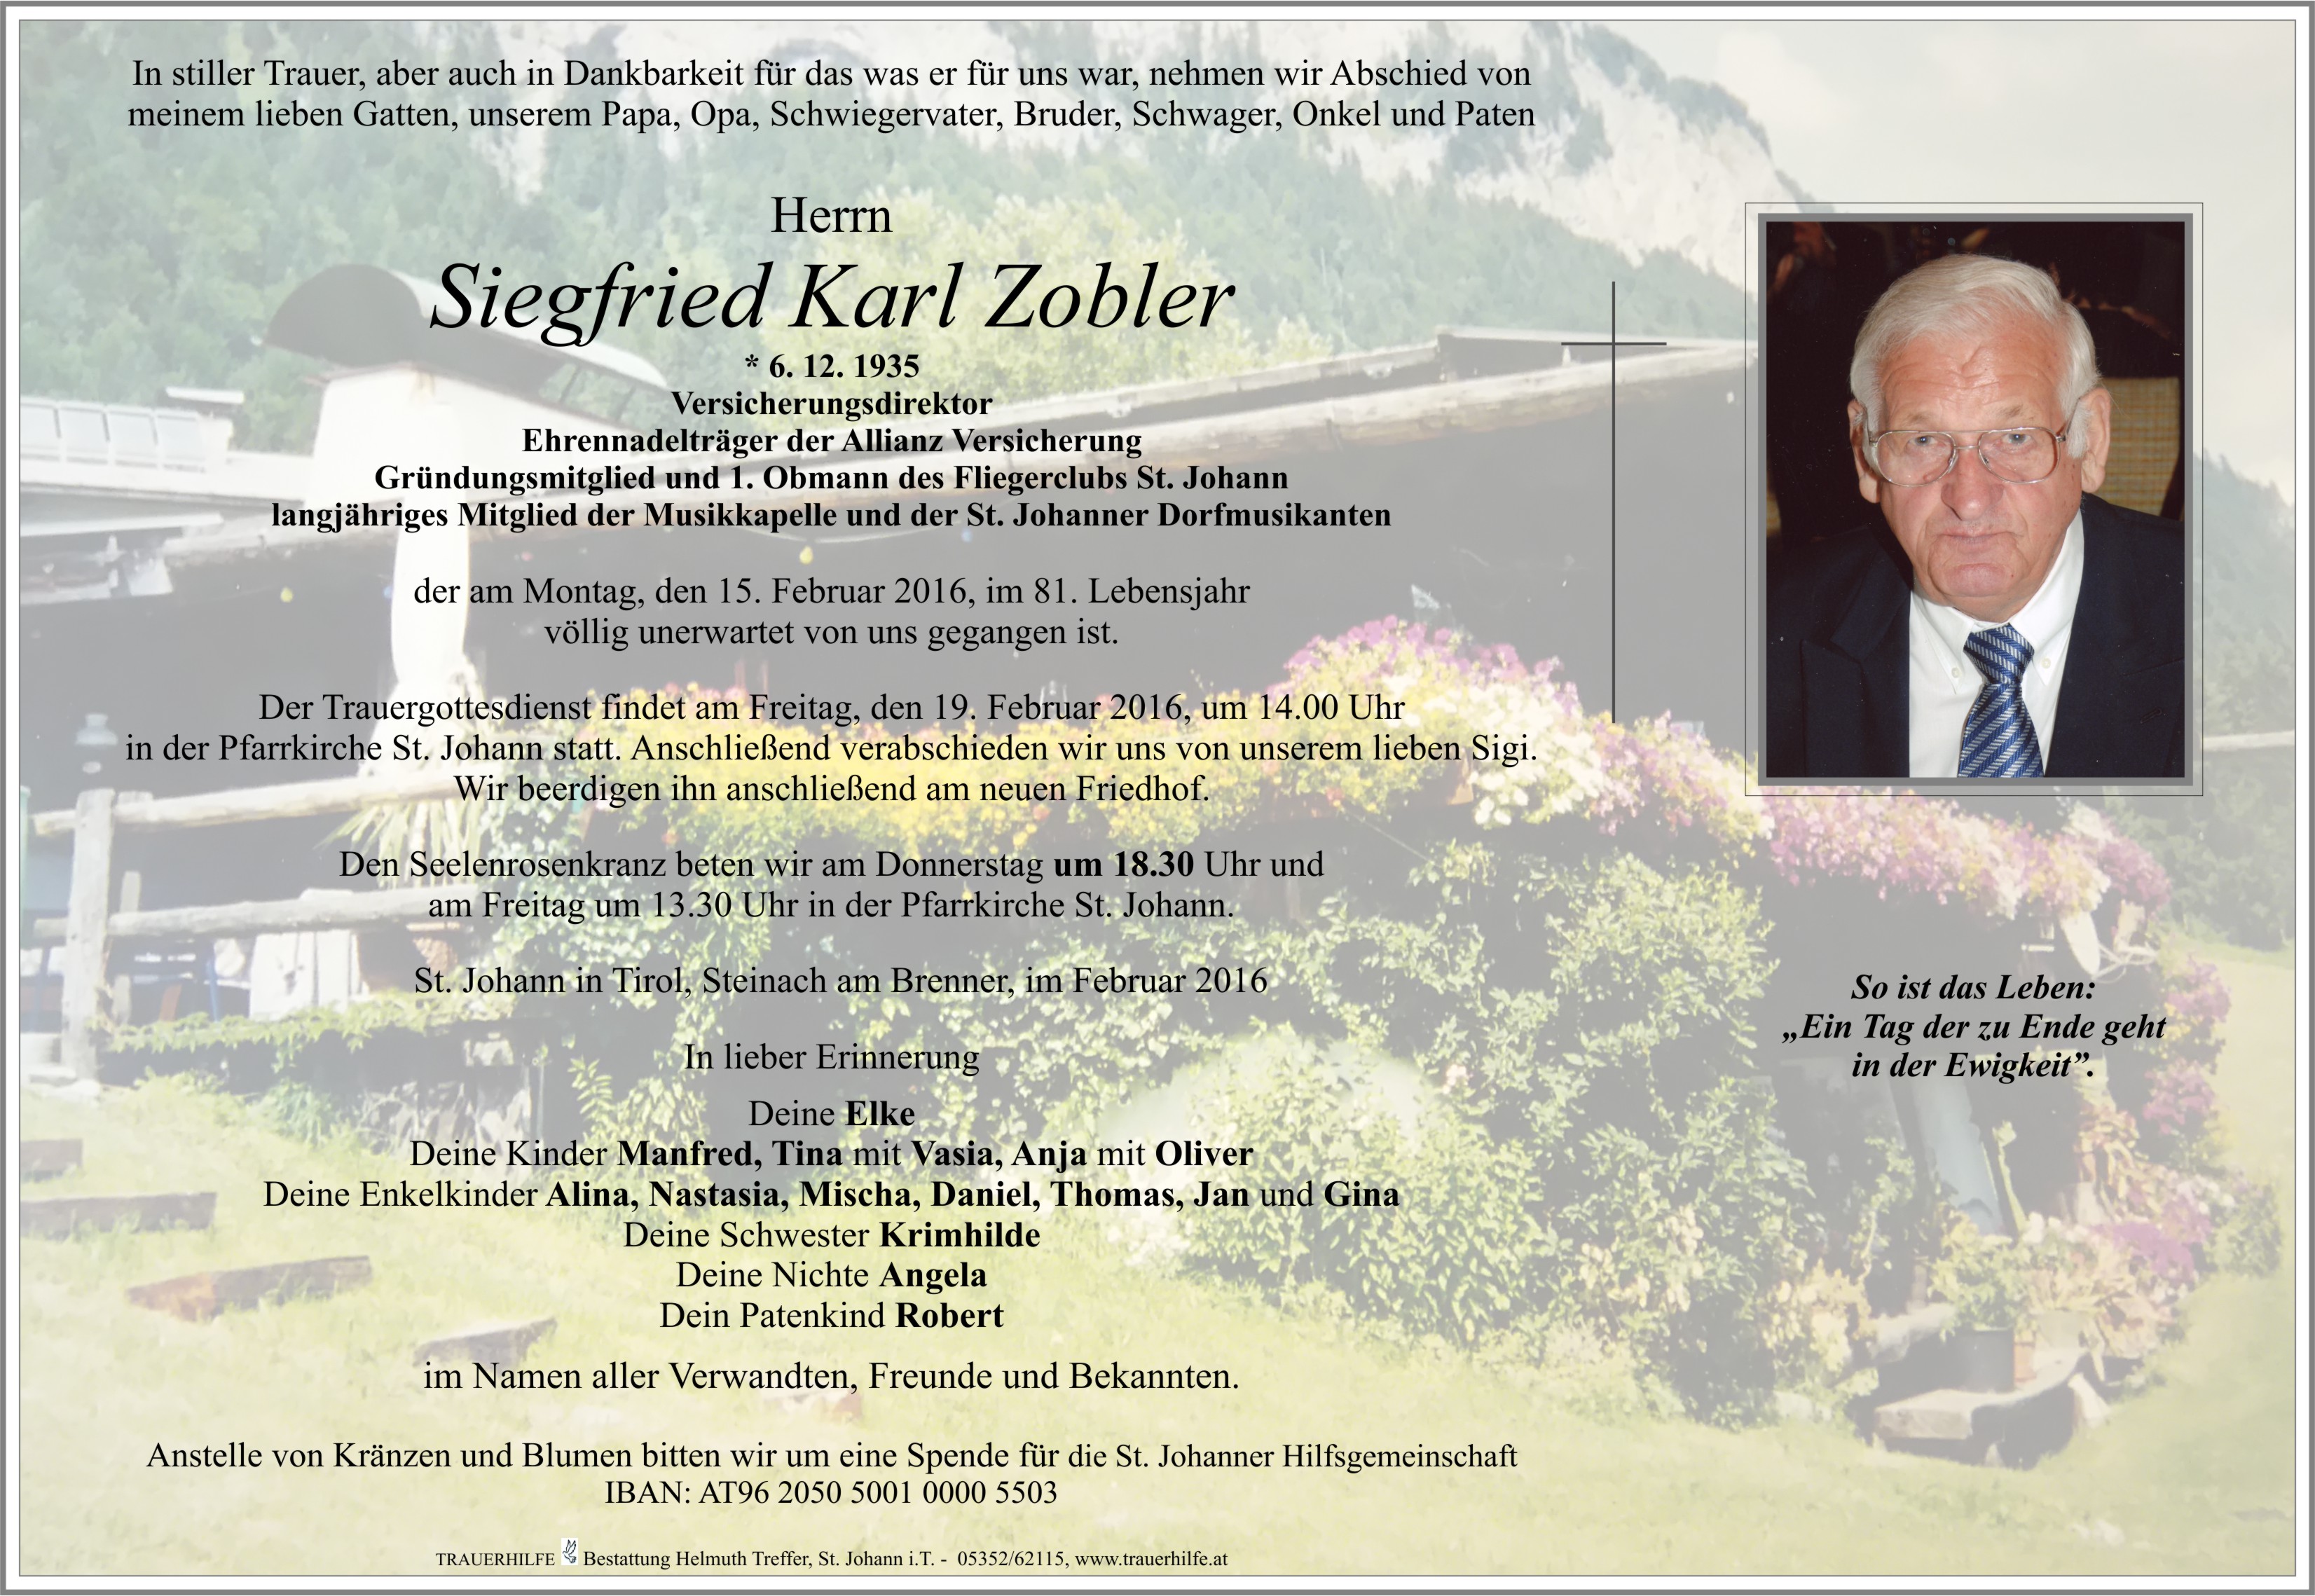 Siegfried Karl Zobler